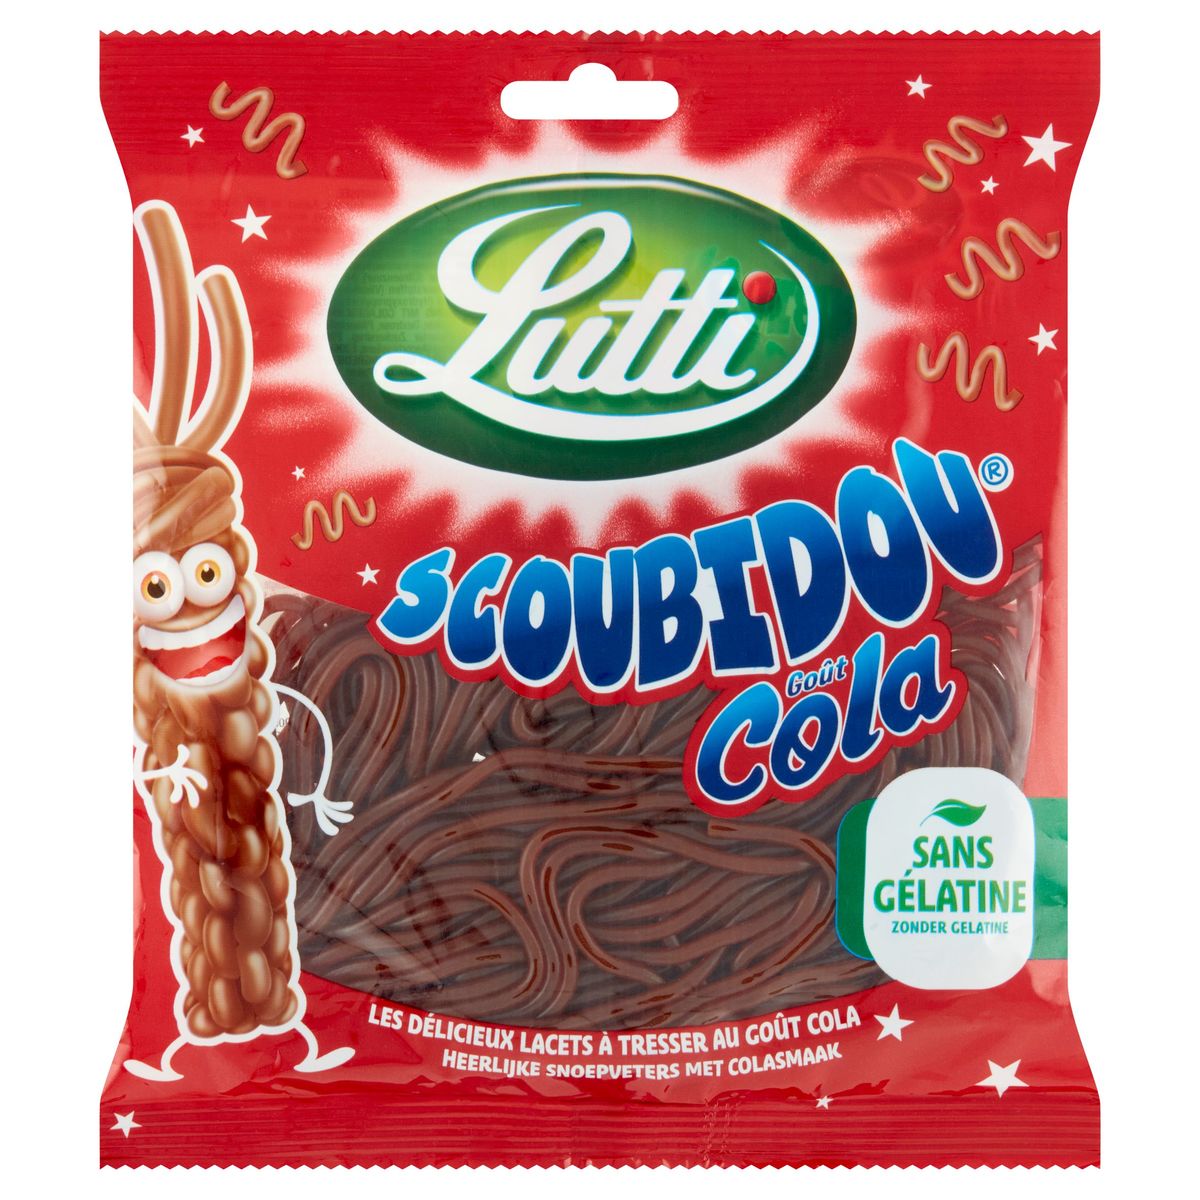 Lutti - Bonbons scoubidou cola - Supermarchés Match